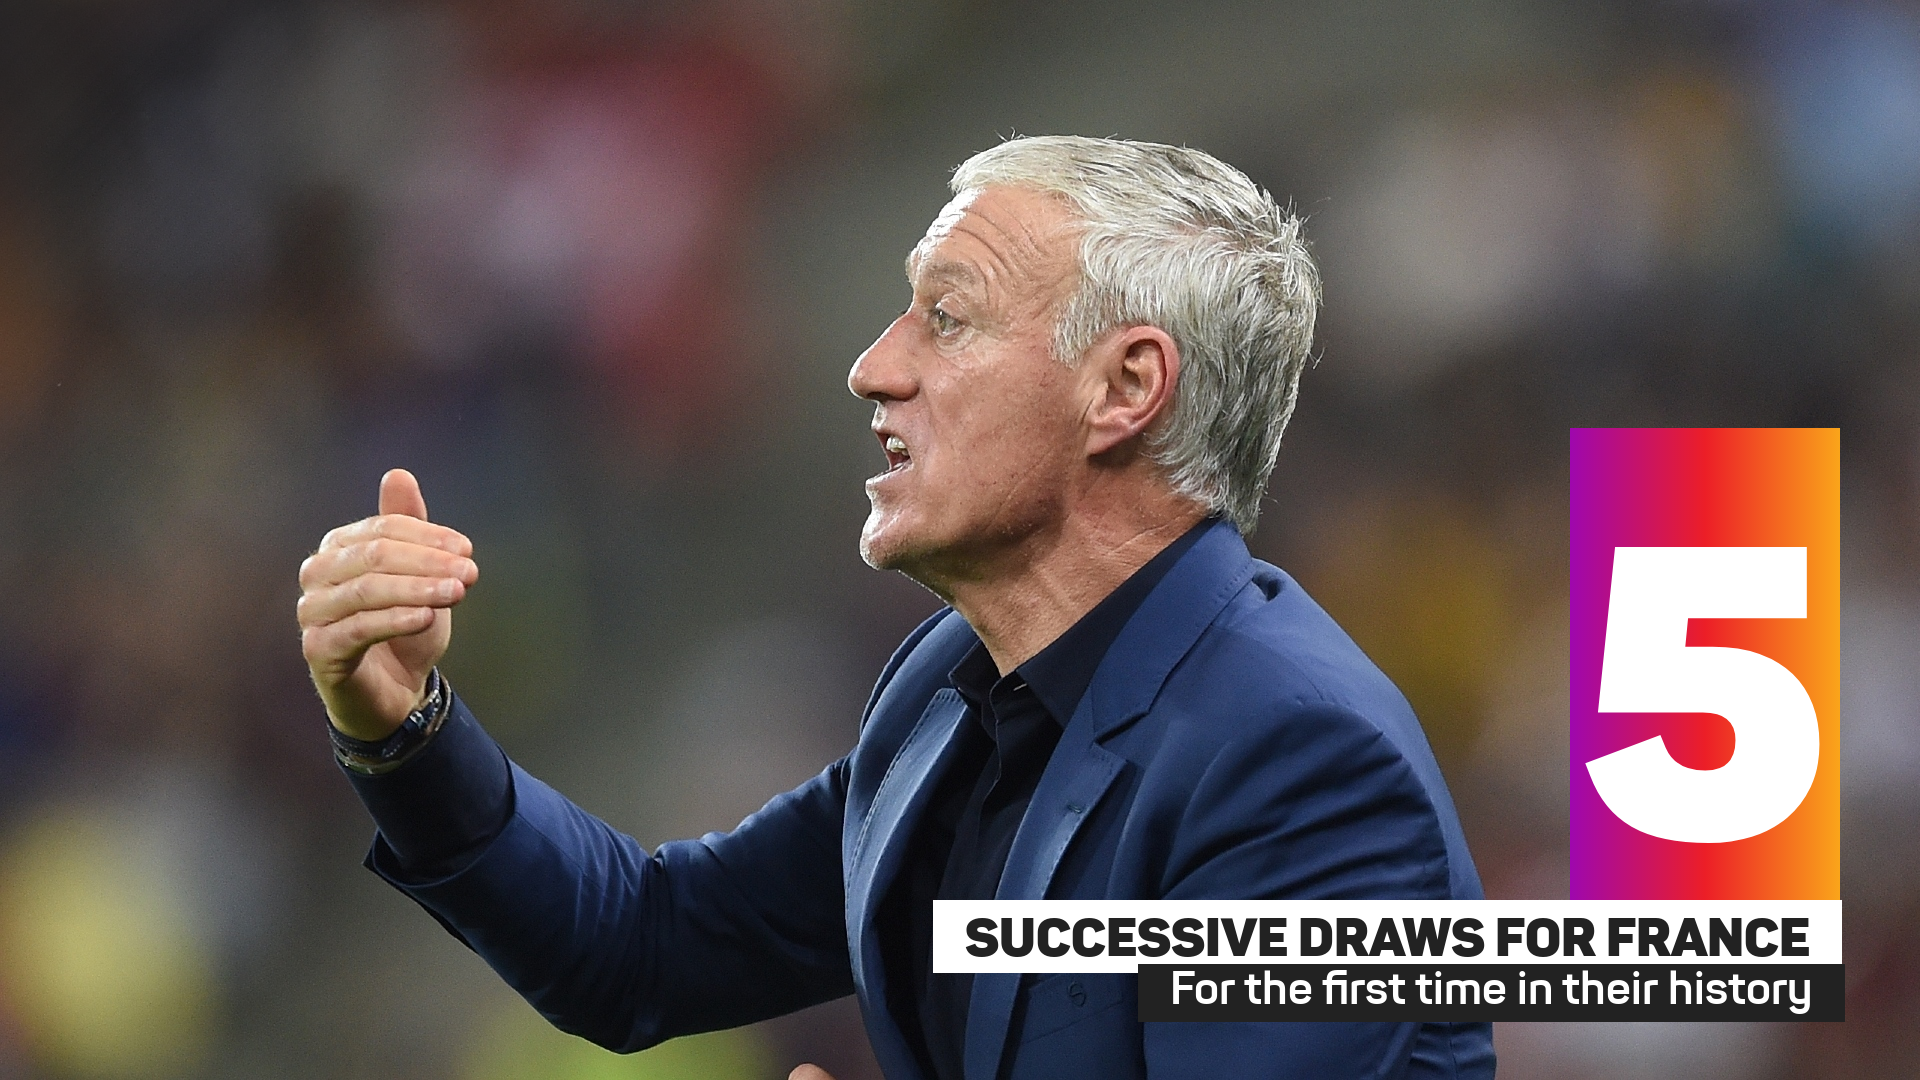 France have drawn five successive games